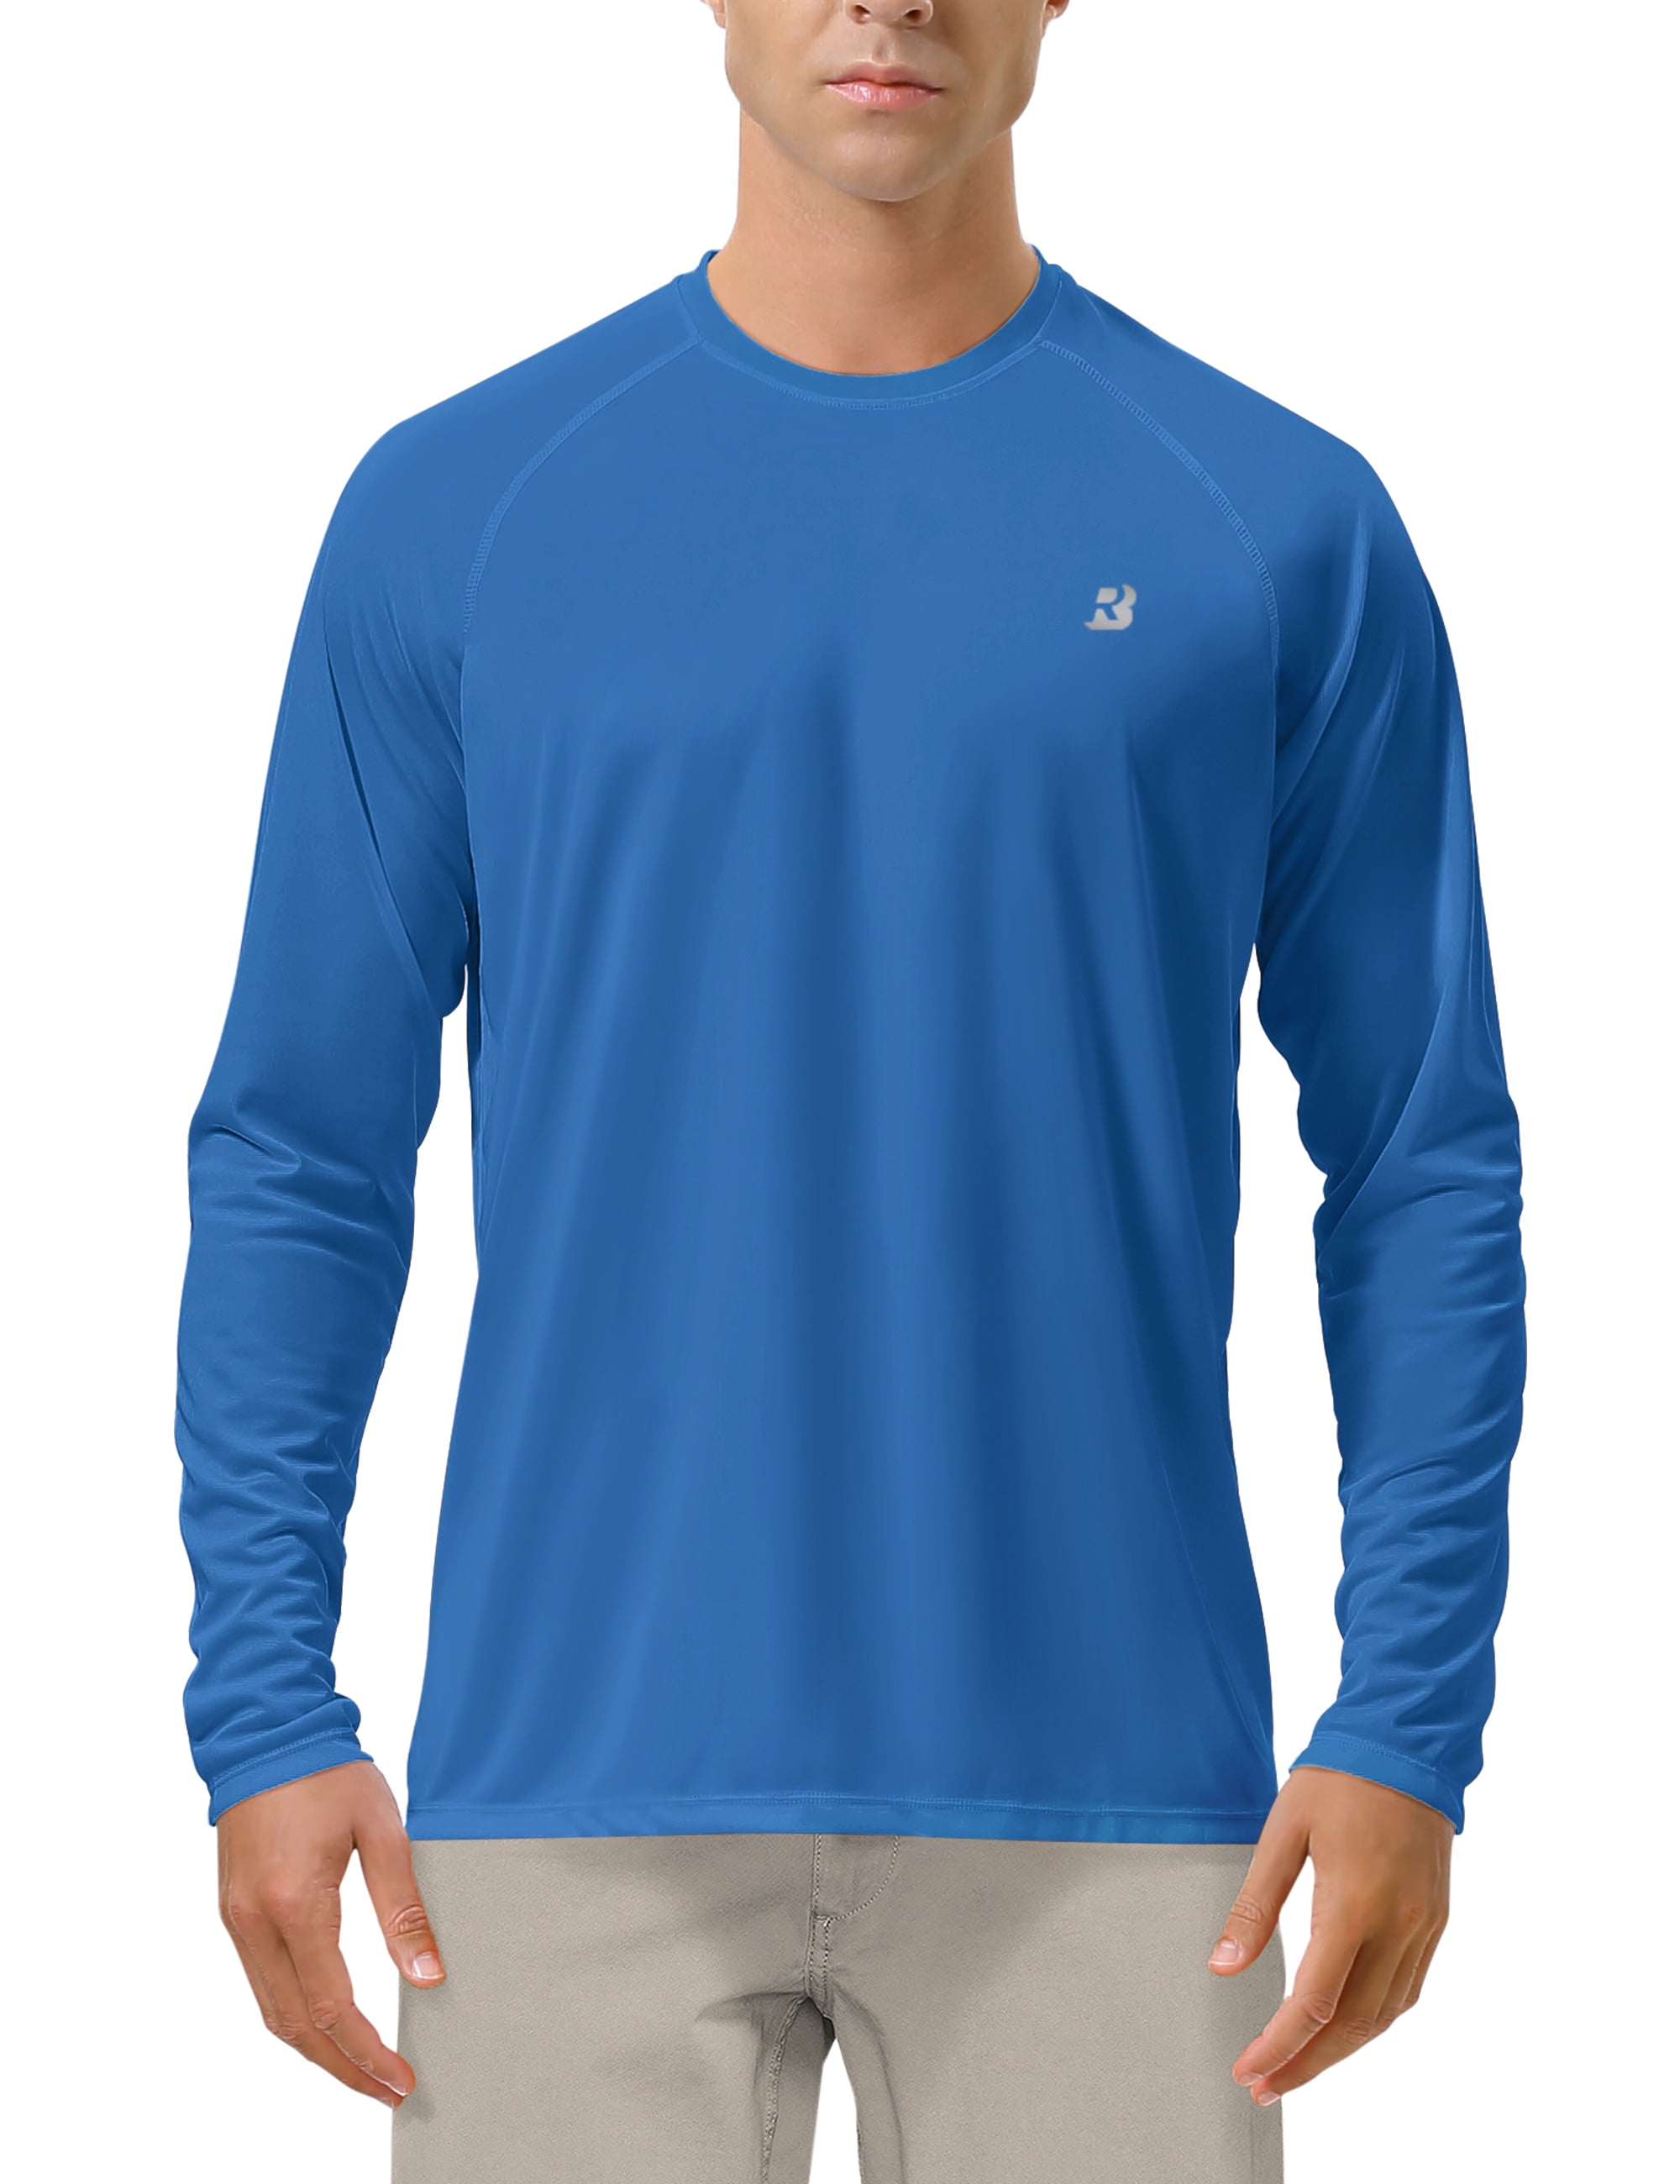 Roadbox UPF 50+ Men's Long Sleeve Fishing Shirts UV Sun Protection Tee Tops  for Outdoors Running Workout 